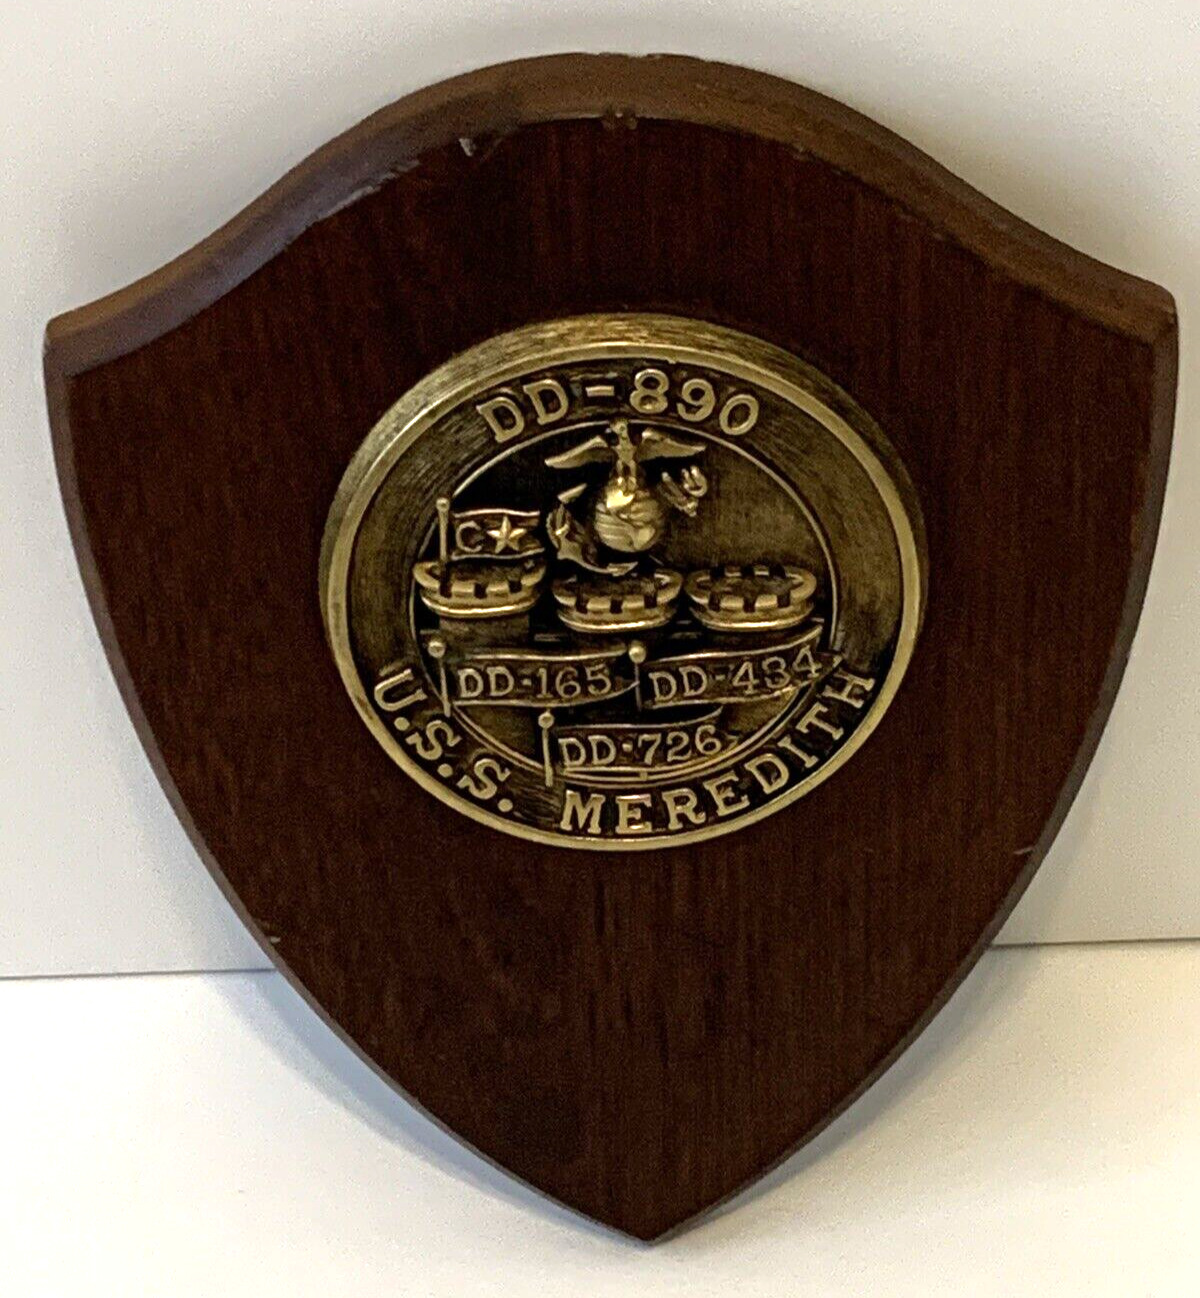 VINTAGE U.S.S Meredith DD-890 Plaque Shield (Wood Metal Wall Mount)